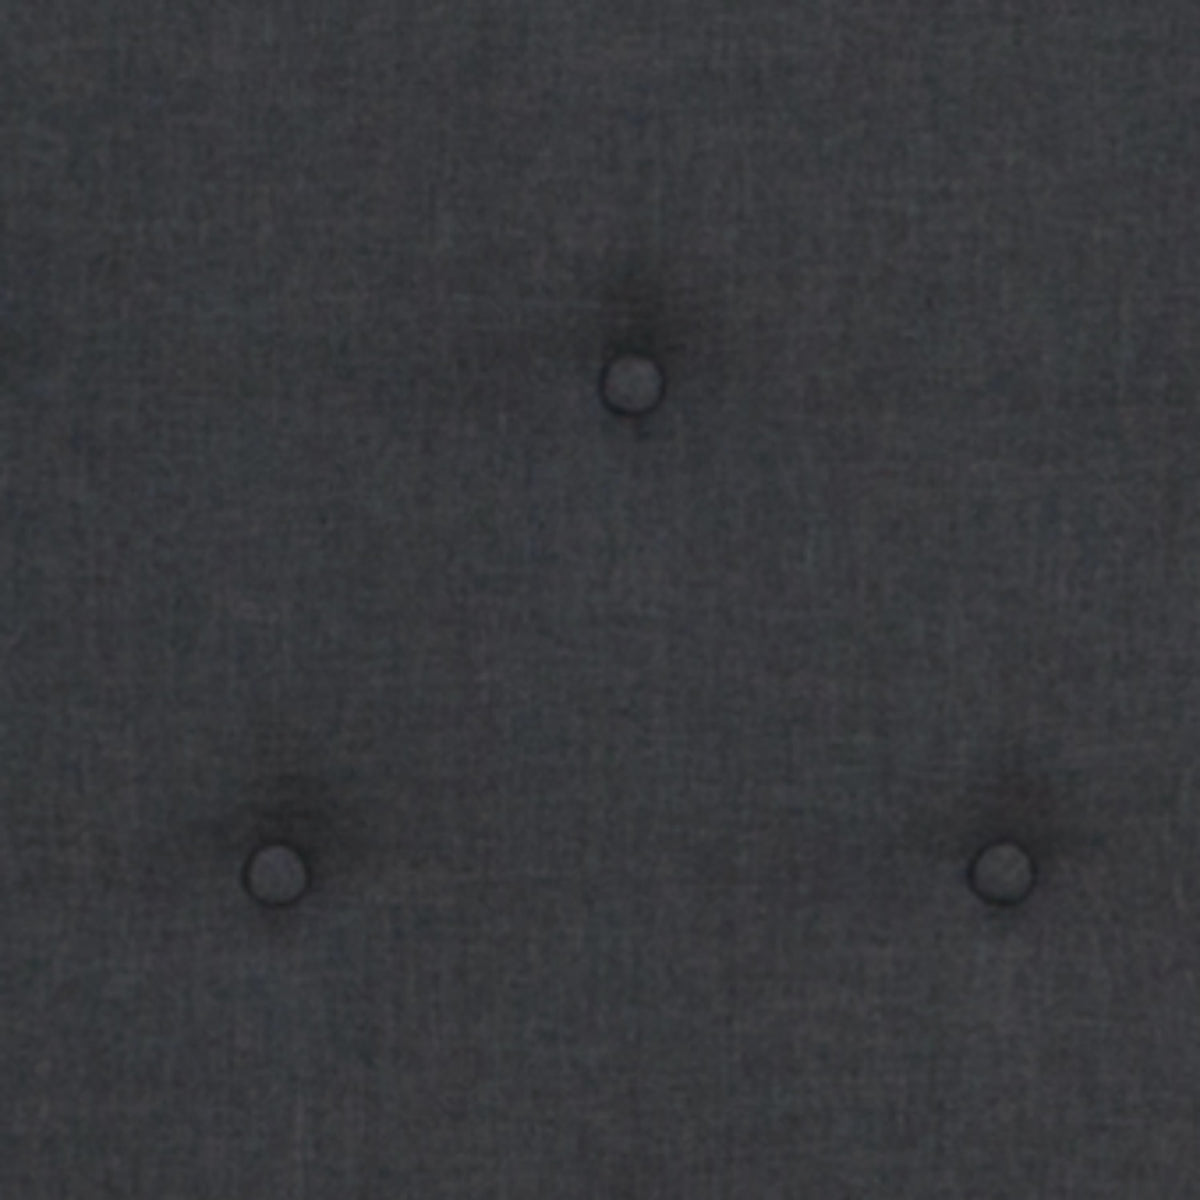 Dark Gray,King |#| King Size Panel Tufted Dk Gray Fabric Platform Bed with Pocket Spring Mattress